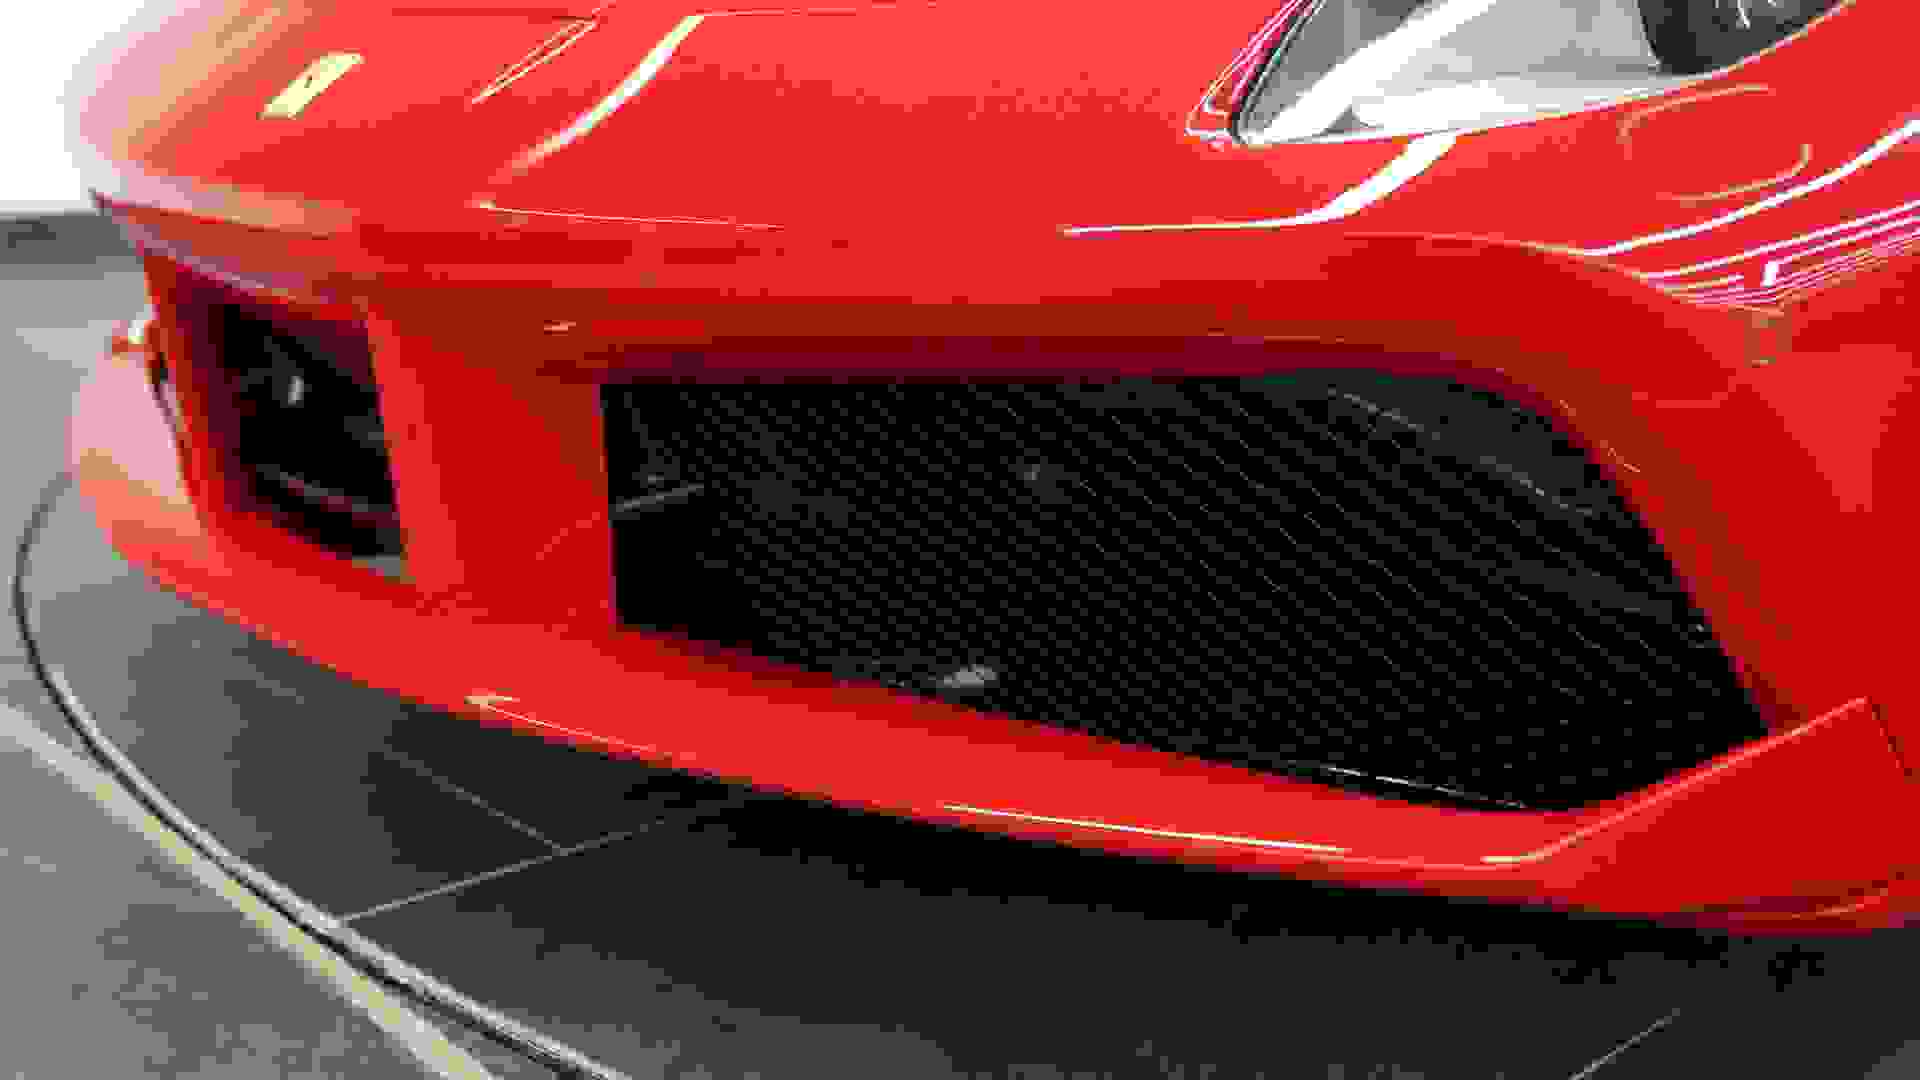 Ferrari 488 Photo 935582a4-9d1c-478f-860f-d64d8e96faae.jpg